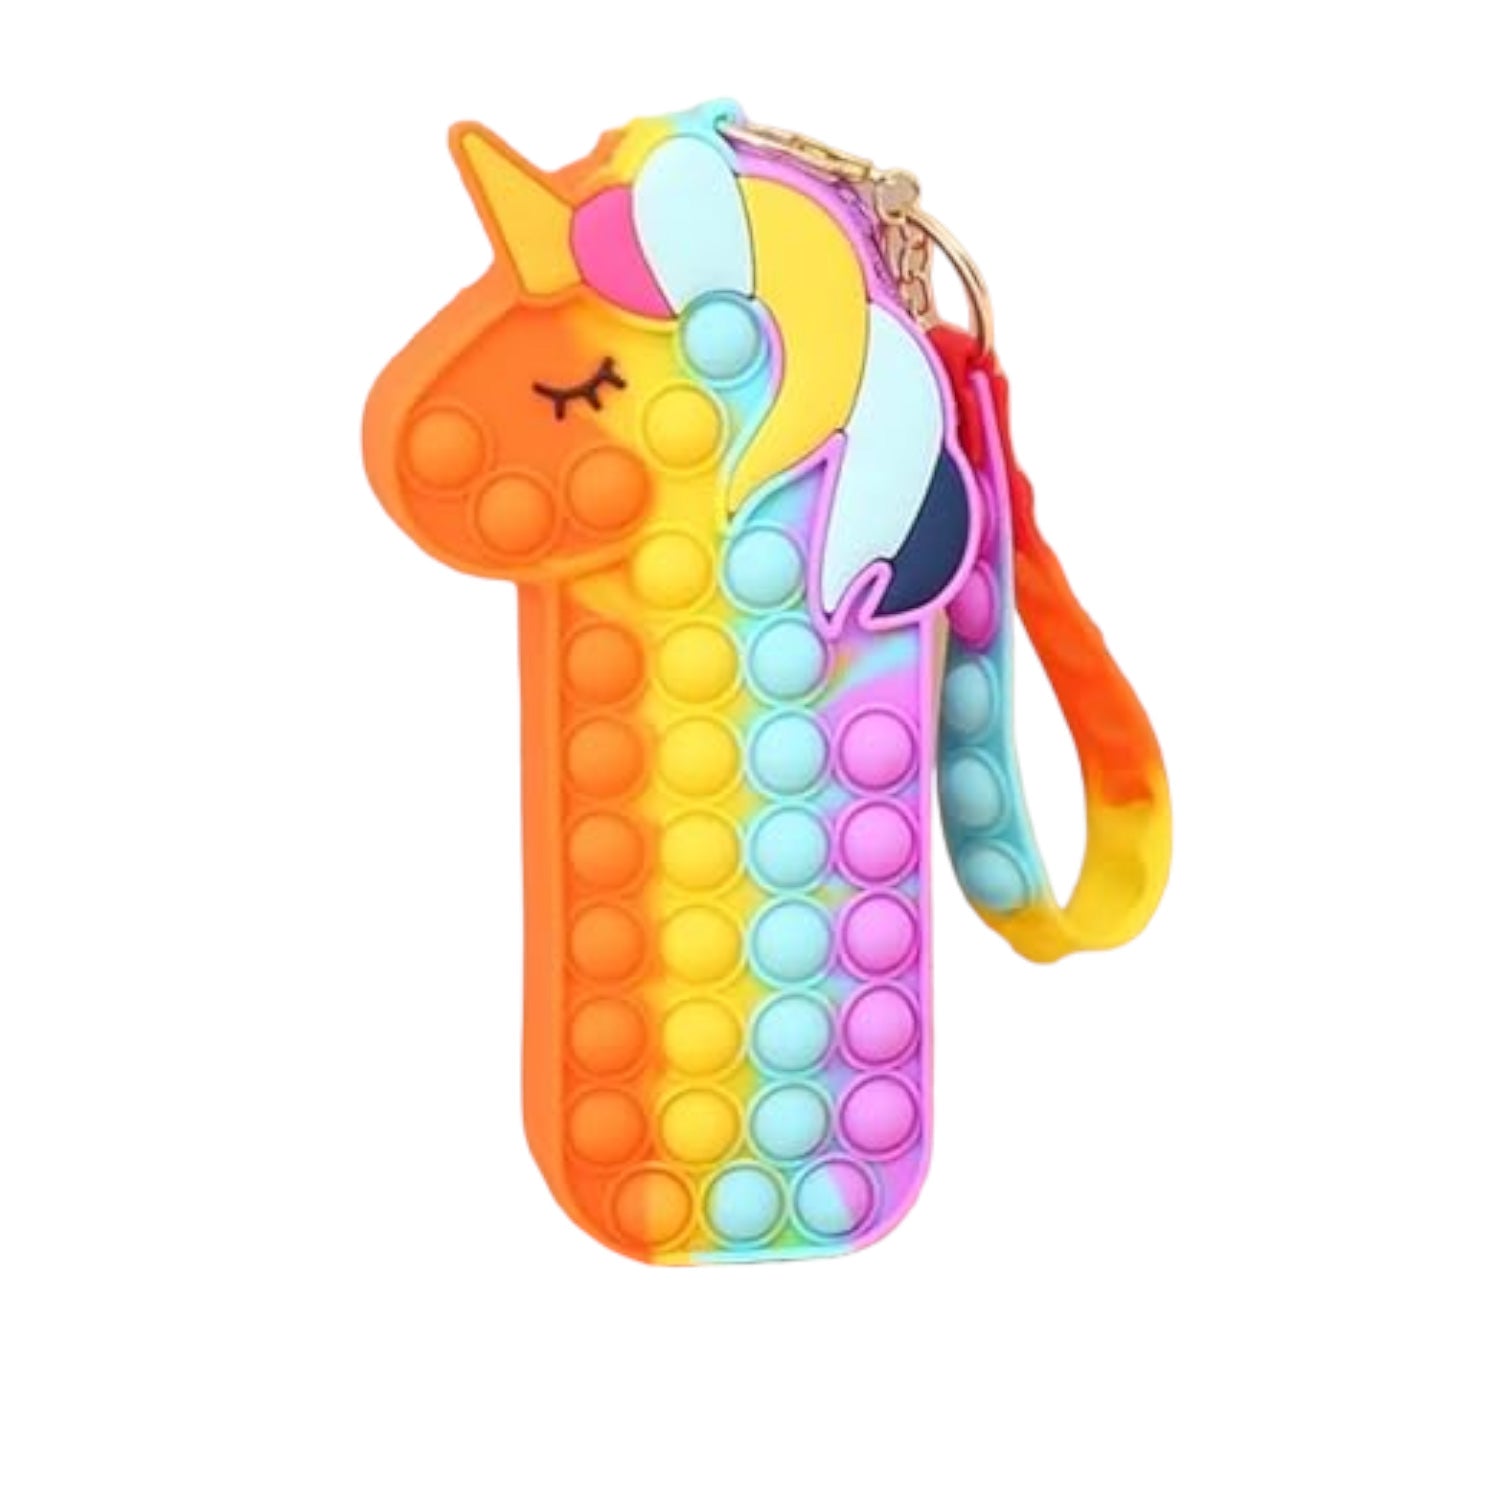 Pop It Pouch Unicorn | Pencil Box / Pen - Pencil Case | Pop It Toy | POP IT Bubble Pouch | Multifunctional Zipper Pouch - For School, College, Girls, Kids Birthday Gift & Return Gifts